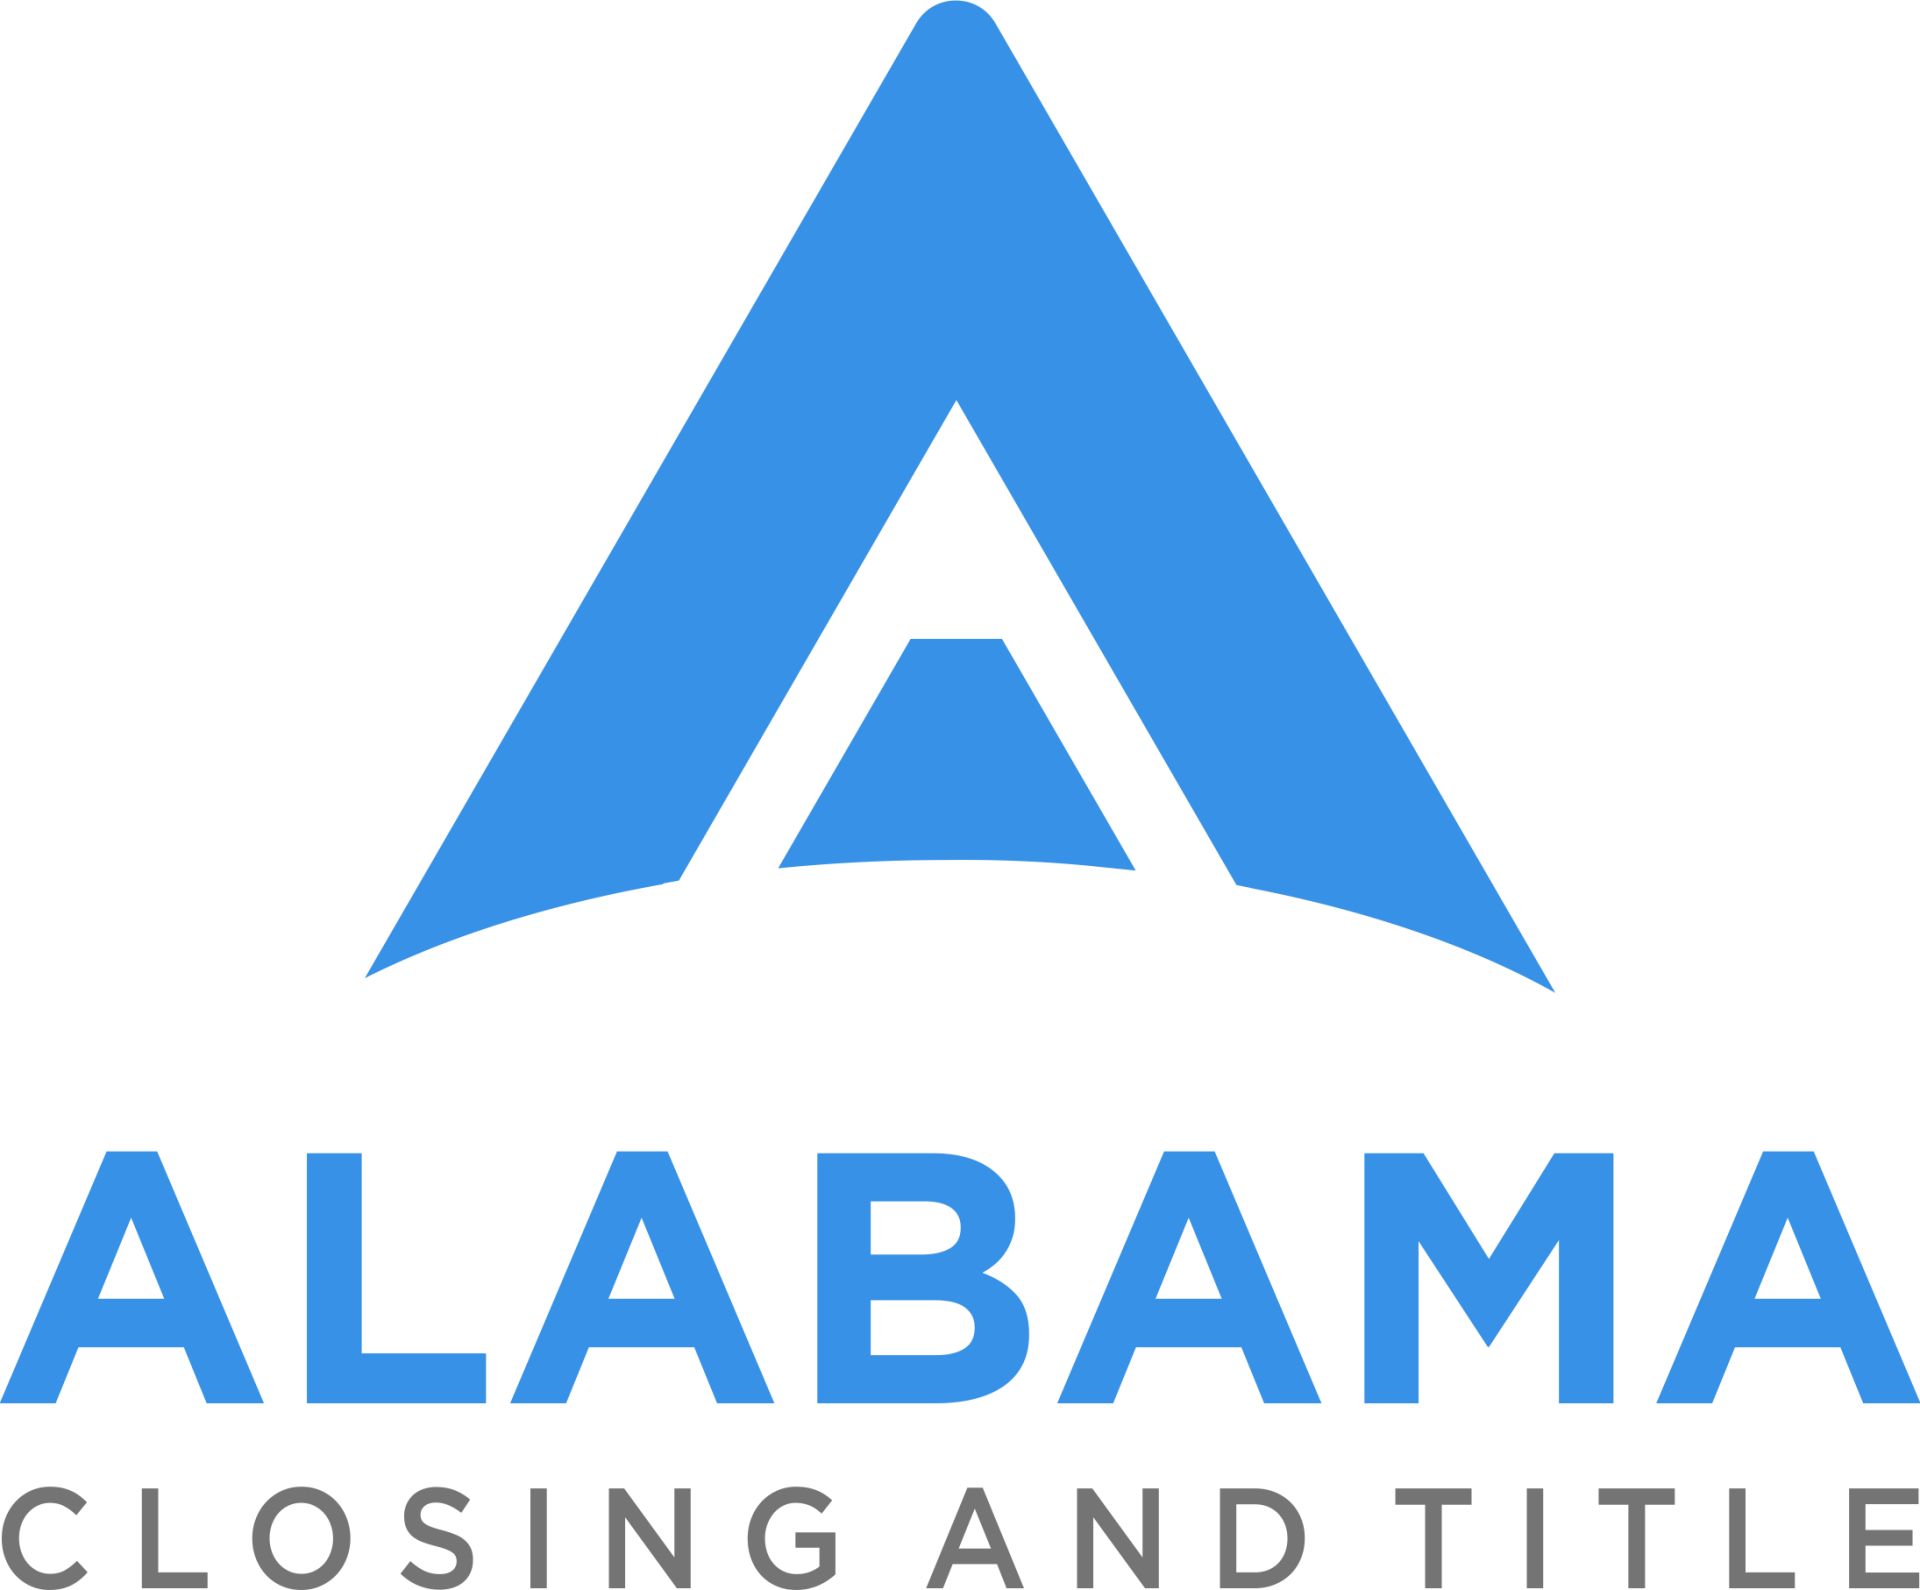 Alabama Closing and Title Logo